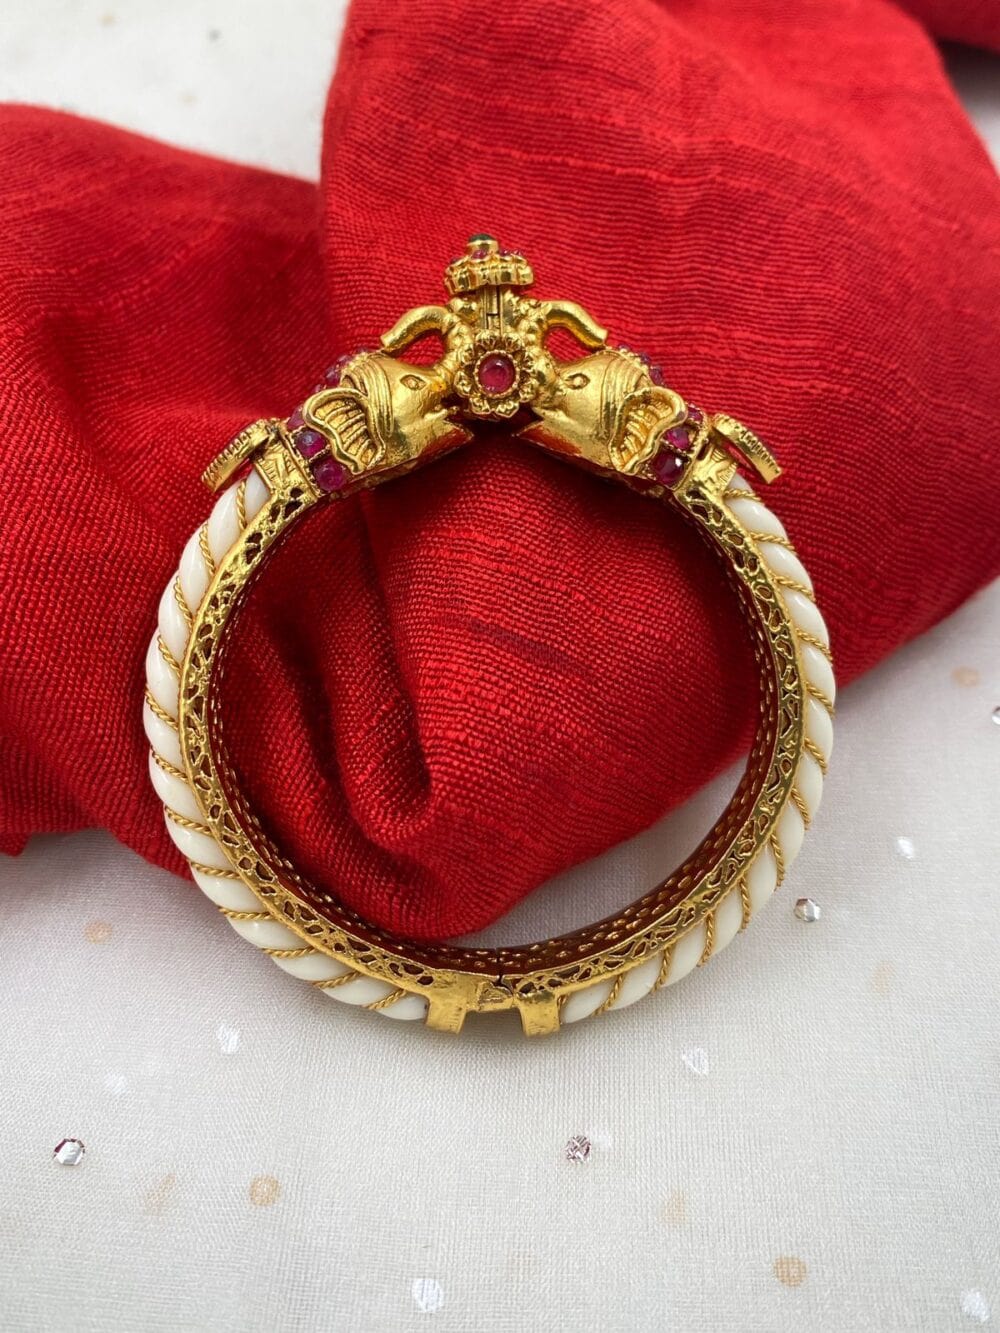 Baraha Jewellery Industries Pvt Ltd वशवसक परतक  Gold Bangles  Weight 15 Tola 17496 gm Per Piece Total Weight 3 tola  34992 gm 22K  Price per Piece NPR 154500 Total Price